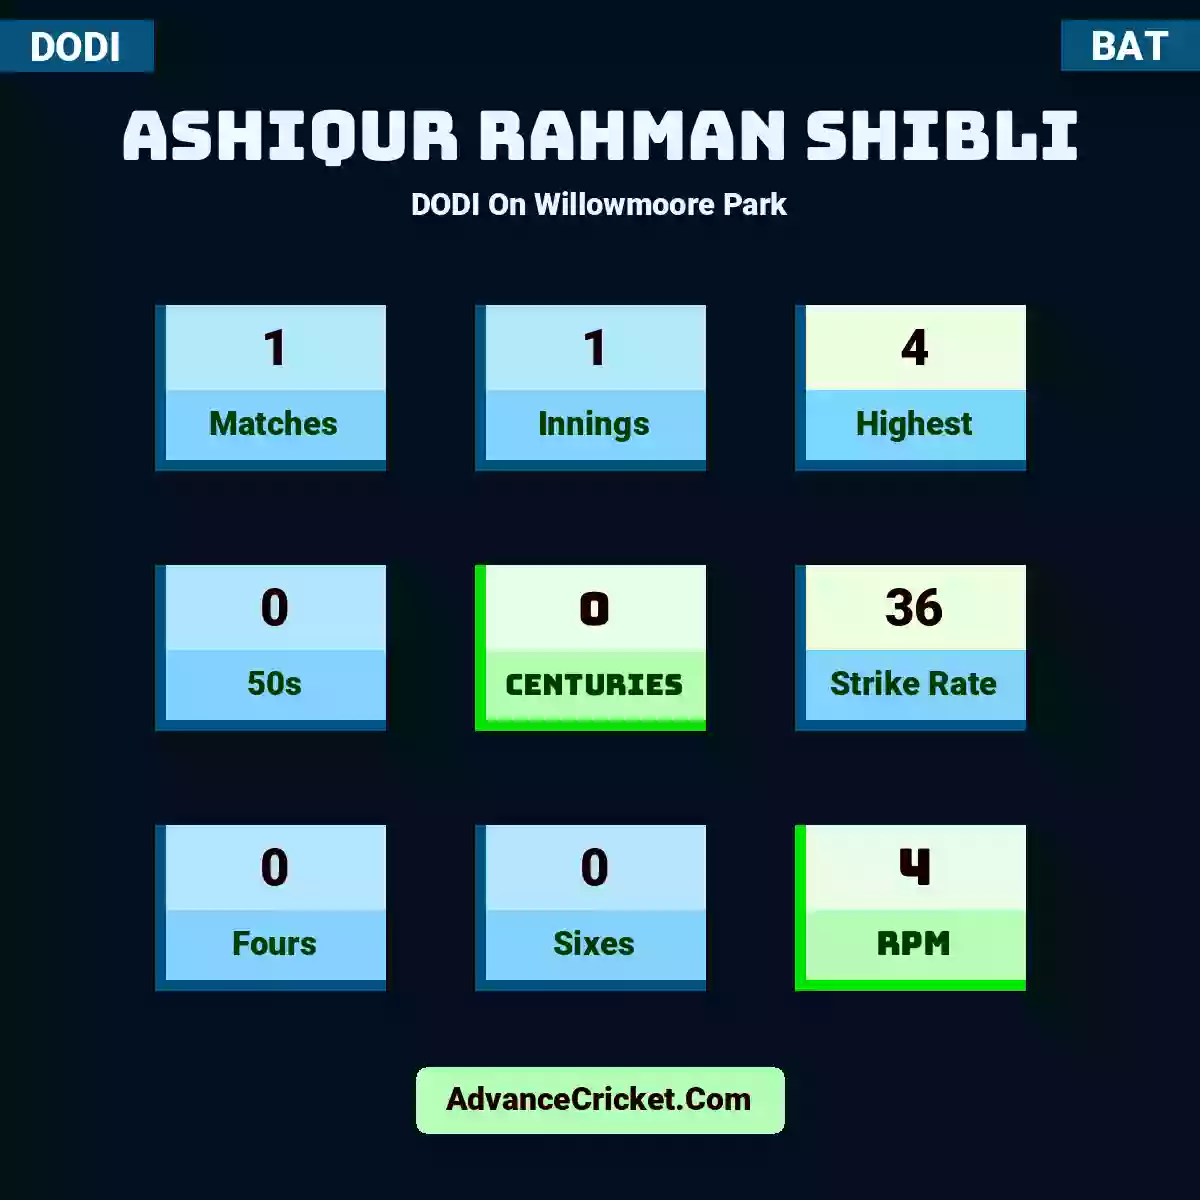 Ashiqur Rahman Shibli DODI  On Willowmoore Park, Ashiqur Rahman Shibli played 1 matches, scored 4 runs as highest, 0 half-centuries, and 0 centuries, with a strike rate of 36. A.Rahman.Shibli hit 0 fours and 0 sixes, with an RPM of 4.